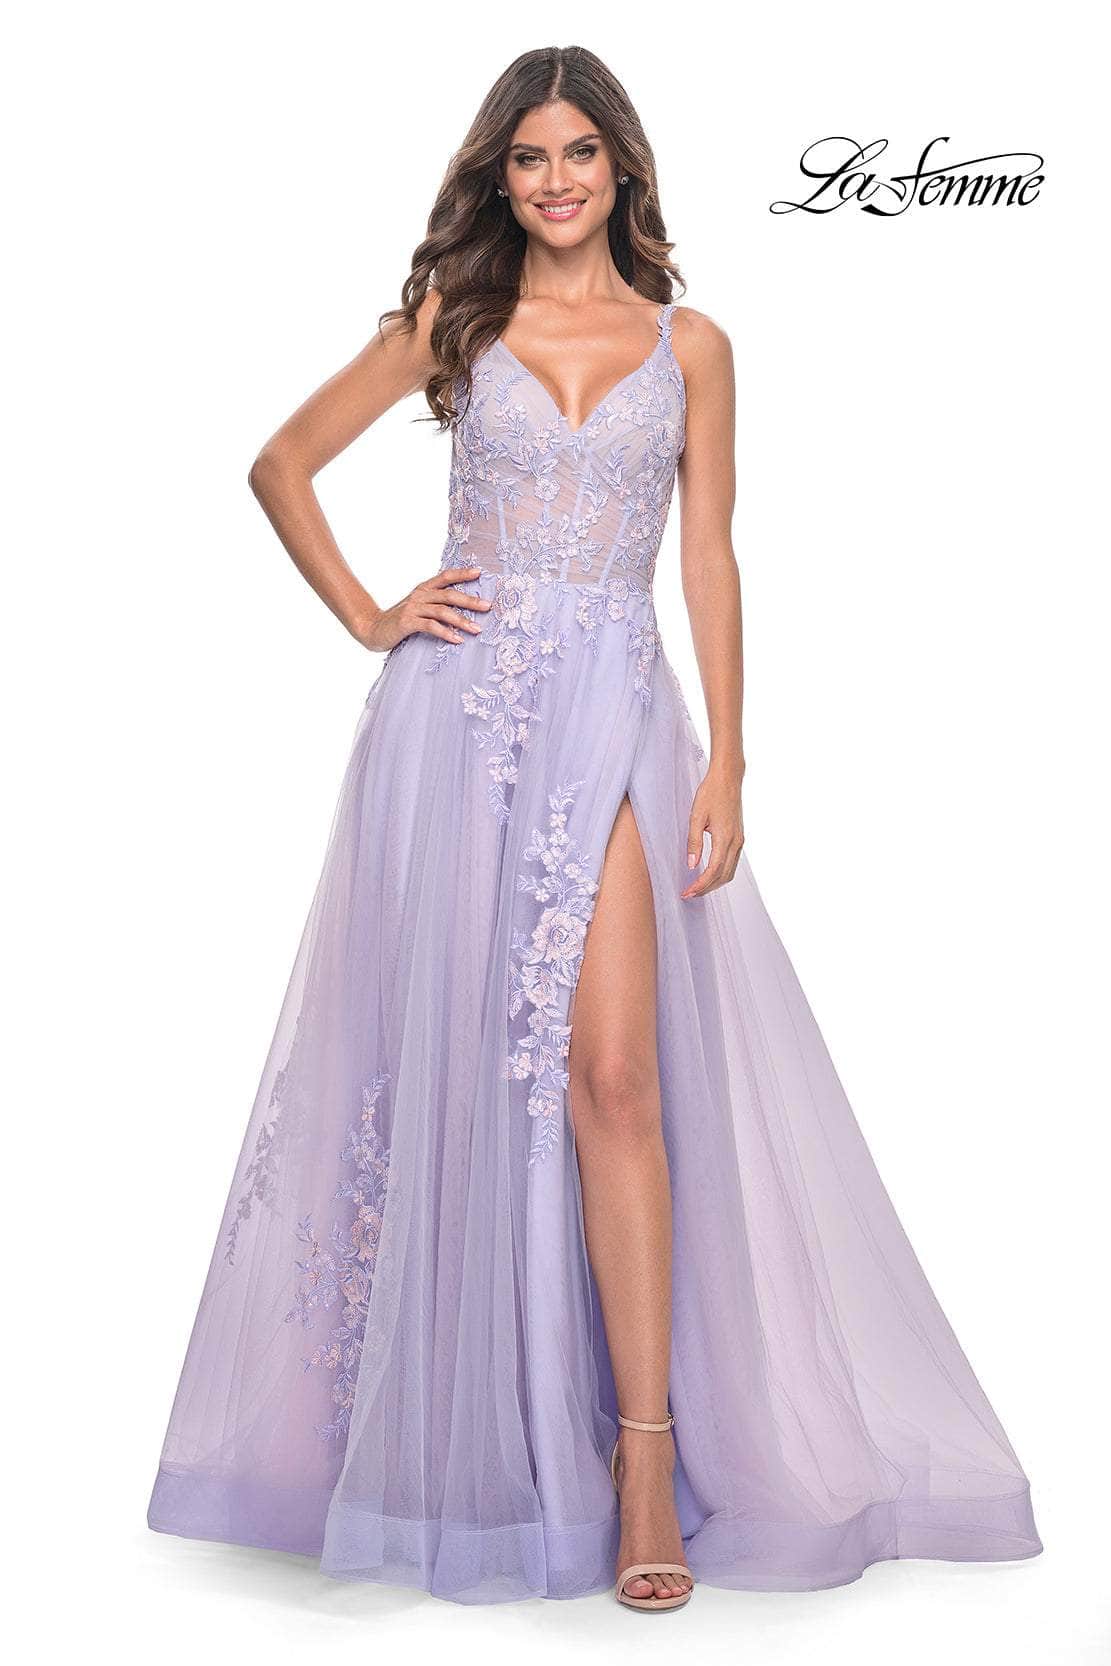 La Femme 31939 - Lace Detailed Prom Dress Special Occasion Dresses